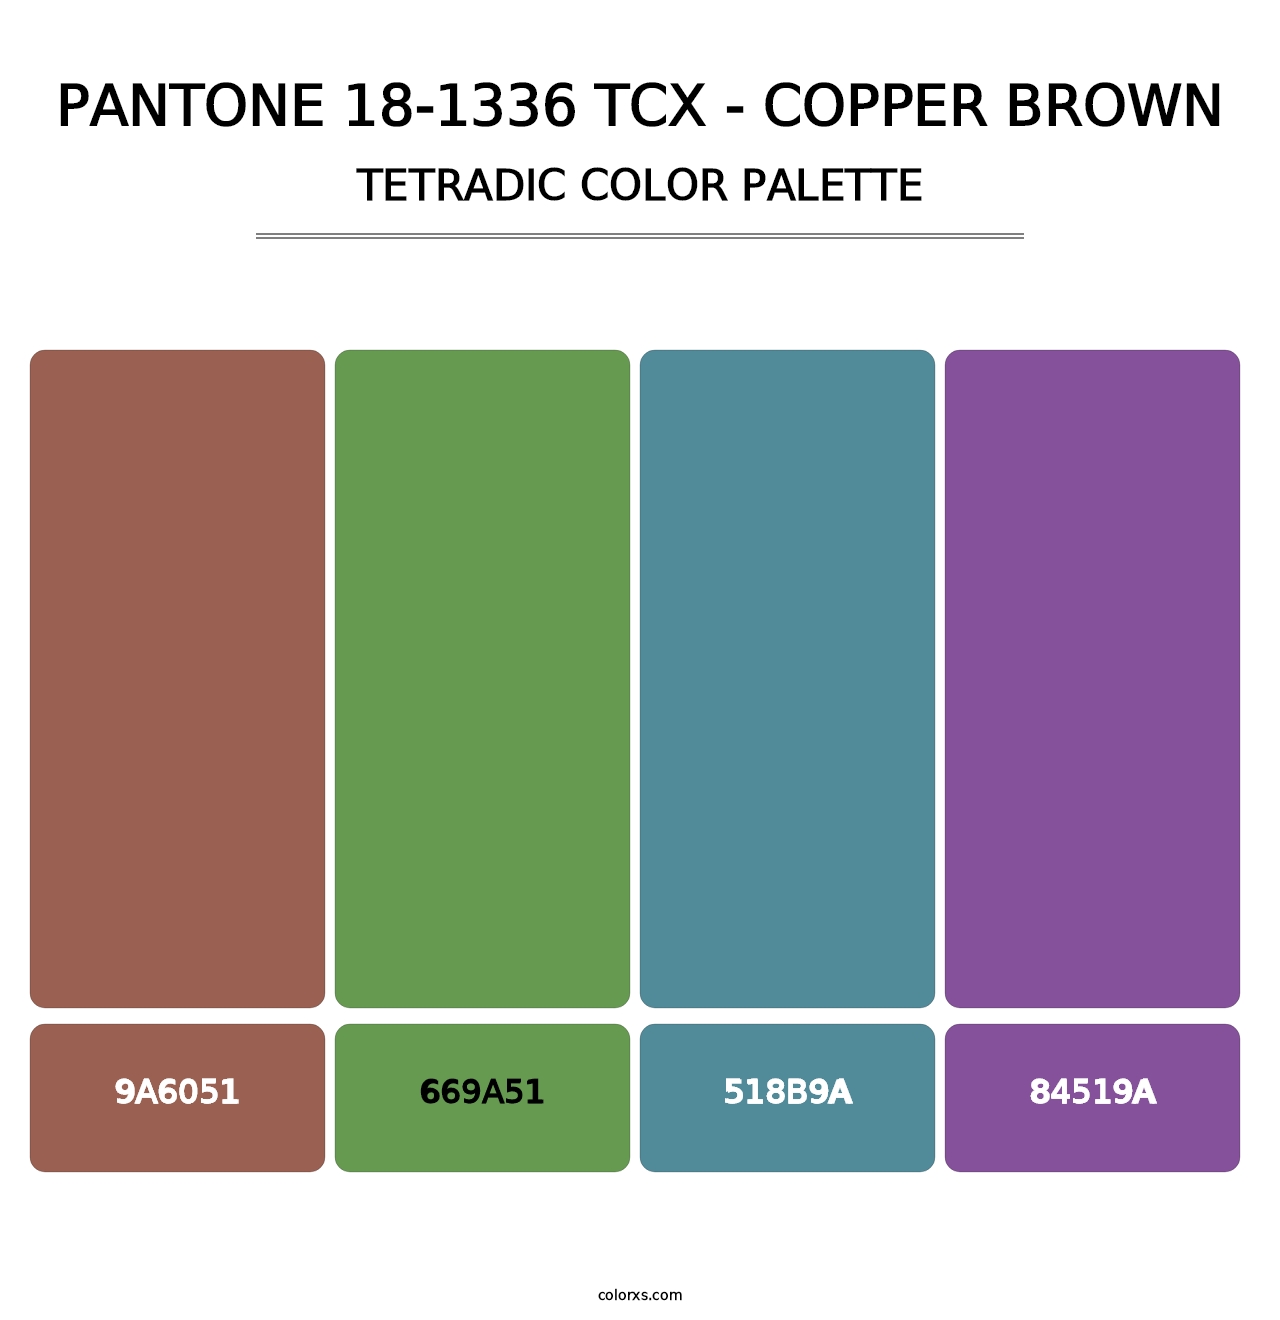 PANTONE 18-1336 TCX - Copper Brown - Tetradic Color Palette